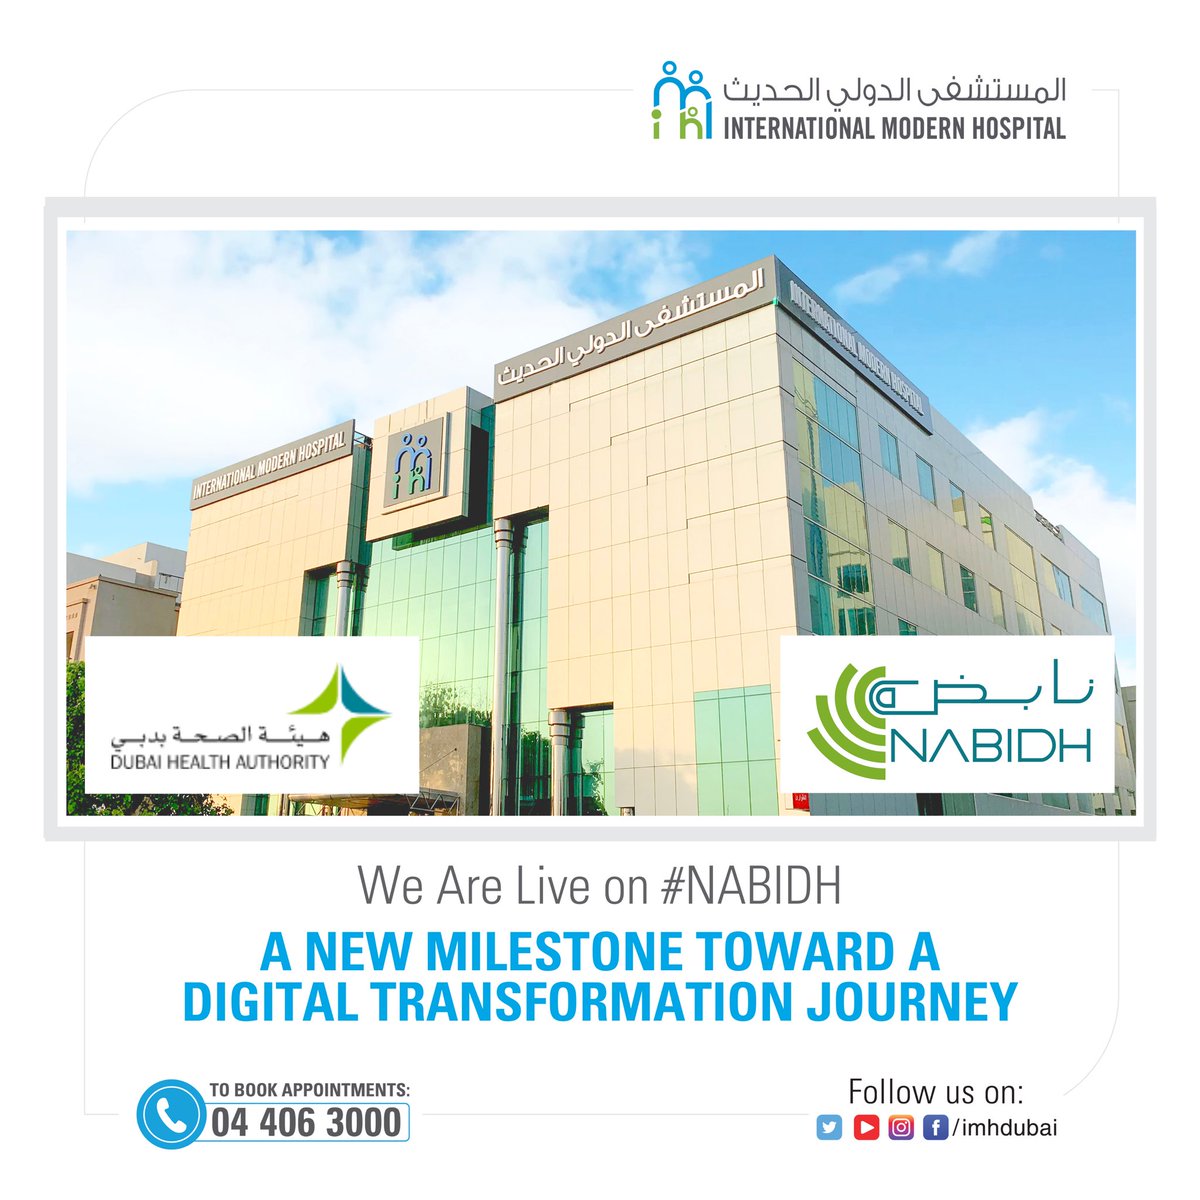 𝐀𝐧𝐨𝐭𝐡𝐞𝐫 𝐦𝐢𝐥𝐞𝐬𝐭𝐨𝐧𝐞 𝐭𝐨𝐰𝐚𝐫𝐝𝐬 𝐚 𝐝𝐢𝐠𝐢𝐭𝐚𝐥 𝐭𝐫𝐚𝐧𝐬𝐟𝐨𝐫𝐦𝐚𝐭𝐢𝐨𝐧 𝐣𝐨𝐮𝐫𝐧𝐞𝐲 𝐚𝐜𝐡𝐢𝐞𝐯𝐞𝐝! We are glad to announce our successful go-live on #NABIDH, Dubai Health Authority's Digital Health Information platform. #imhdubai #imh #DHA #mydxb